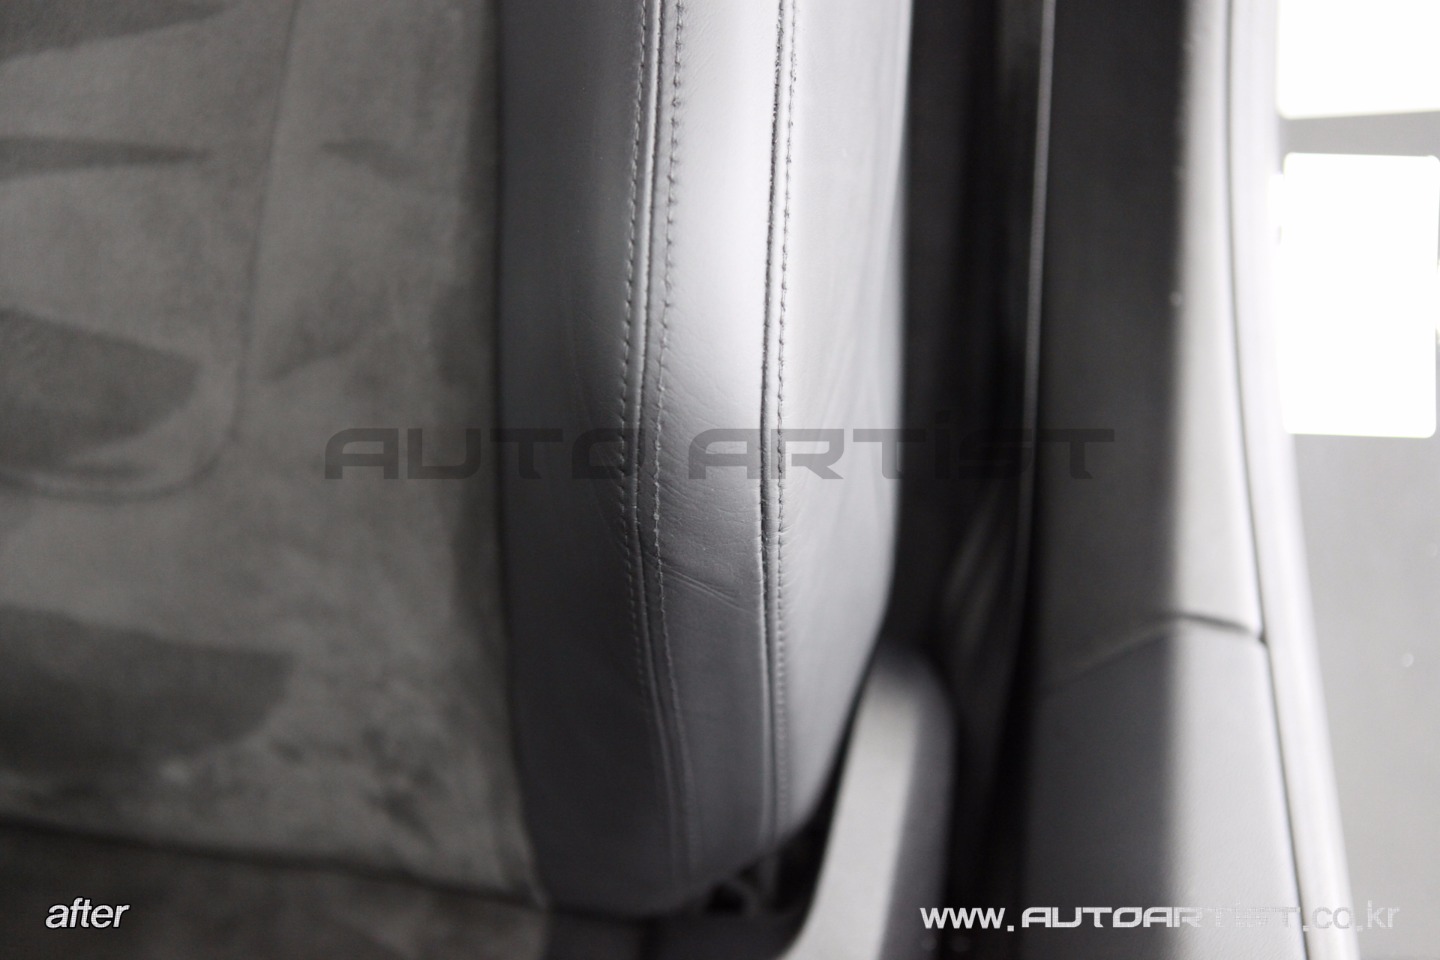 Audi R8(08년식) 시트 & 도어트림 복원